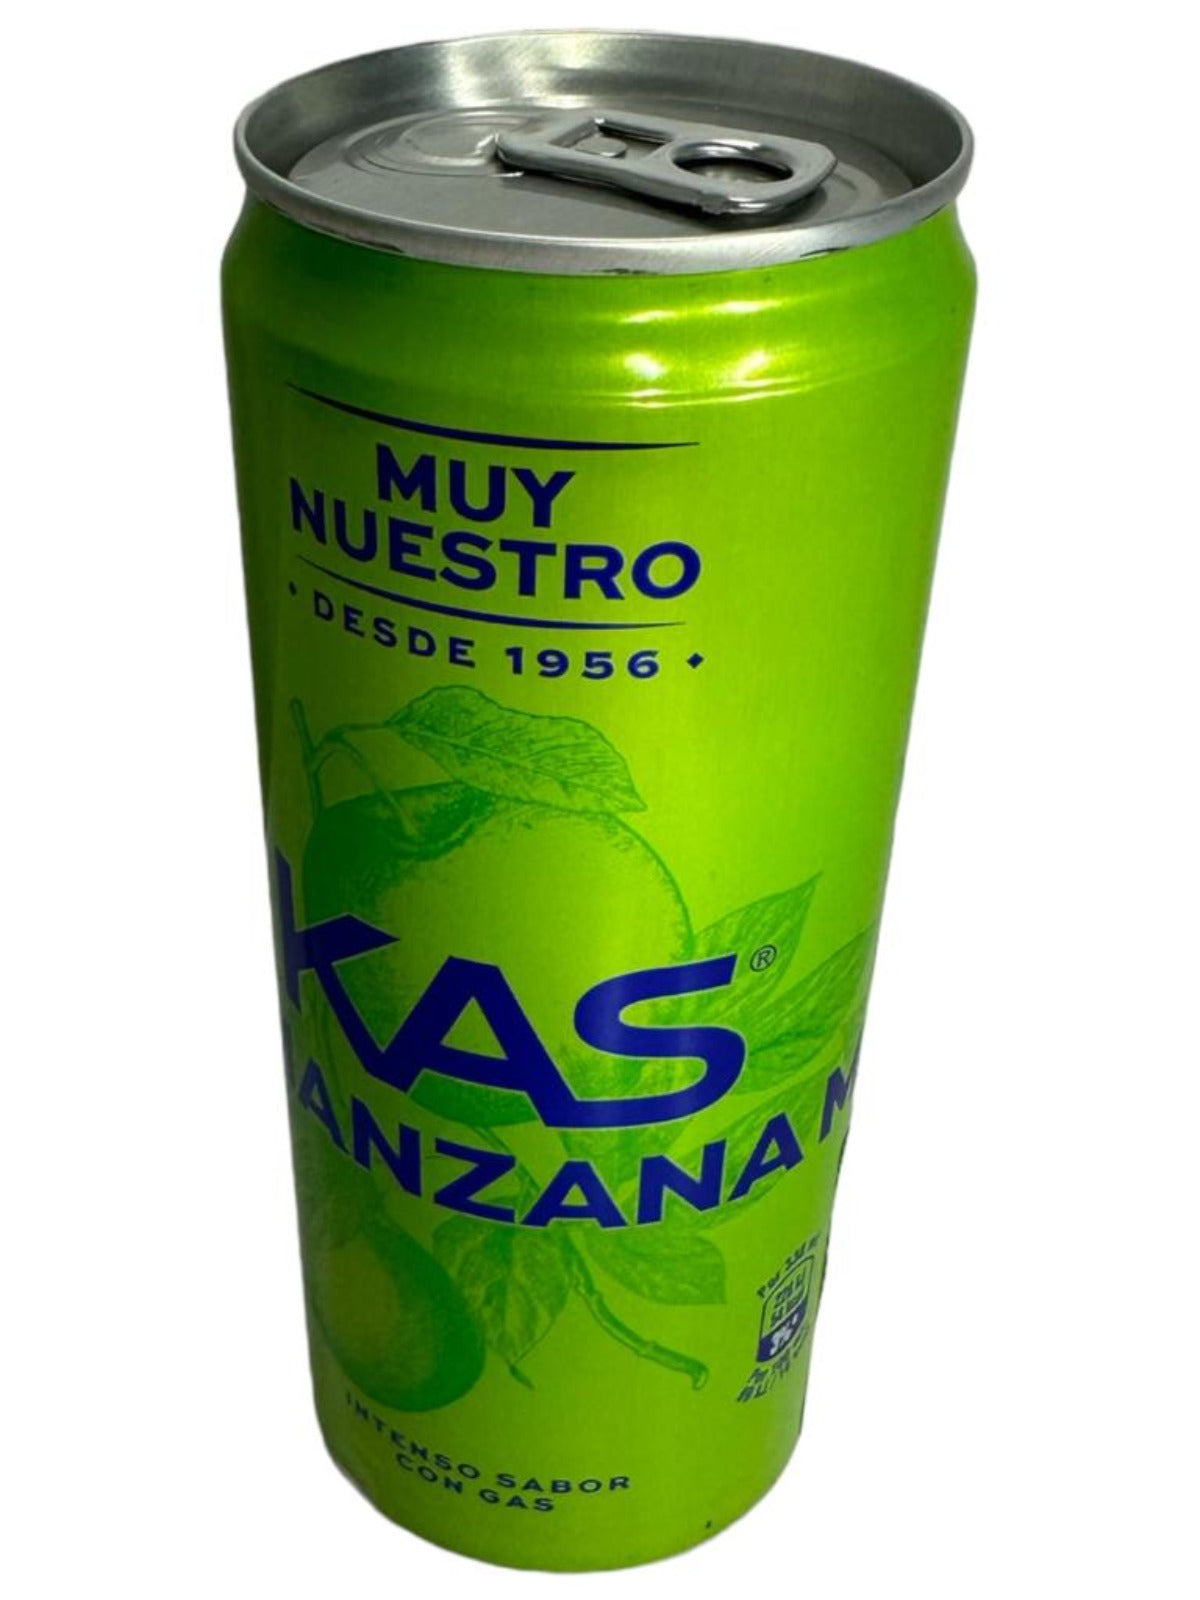 Muy Nuestro KAS Manzana Spanish - Apple soft drink 330ml